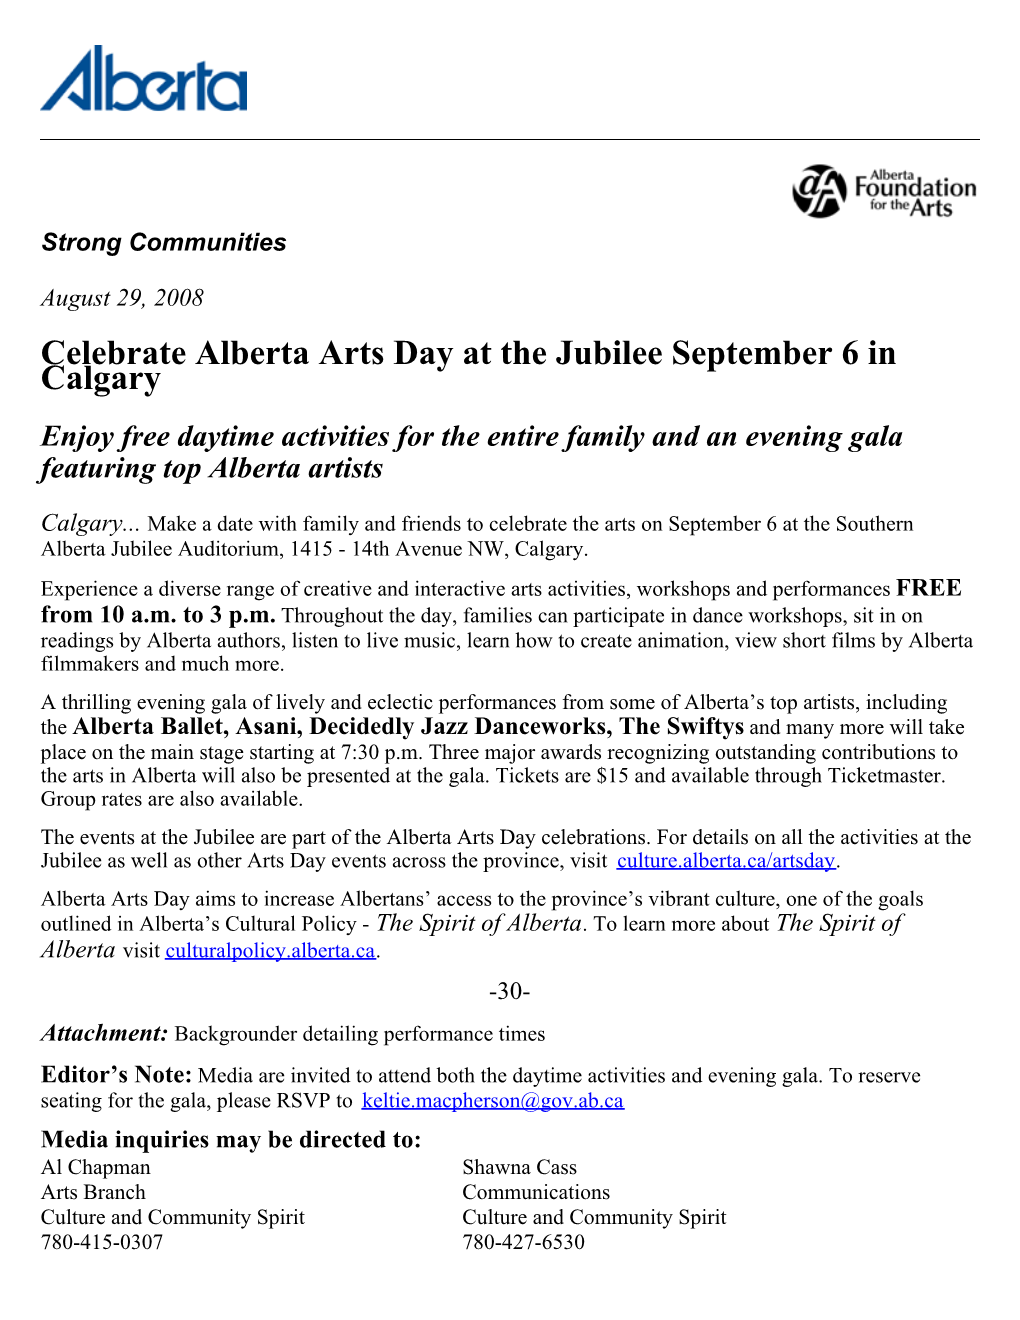 Celebrate Alberta Arts Day at the Jubilee September 6 in Calgary